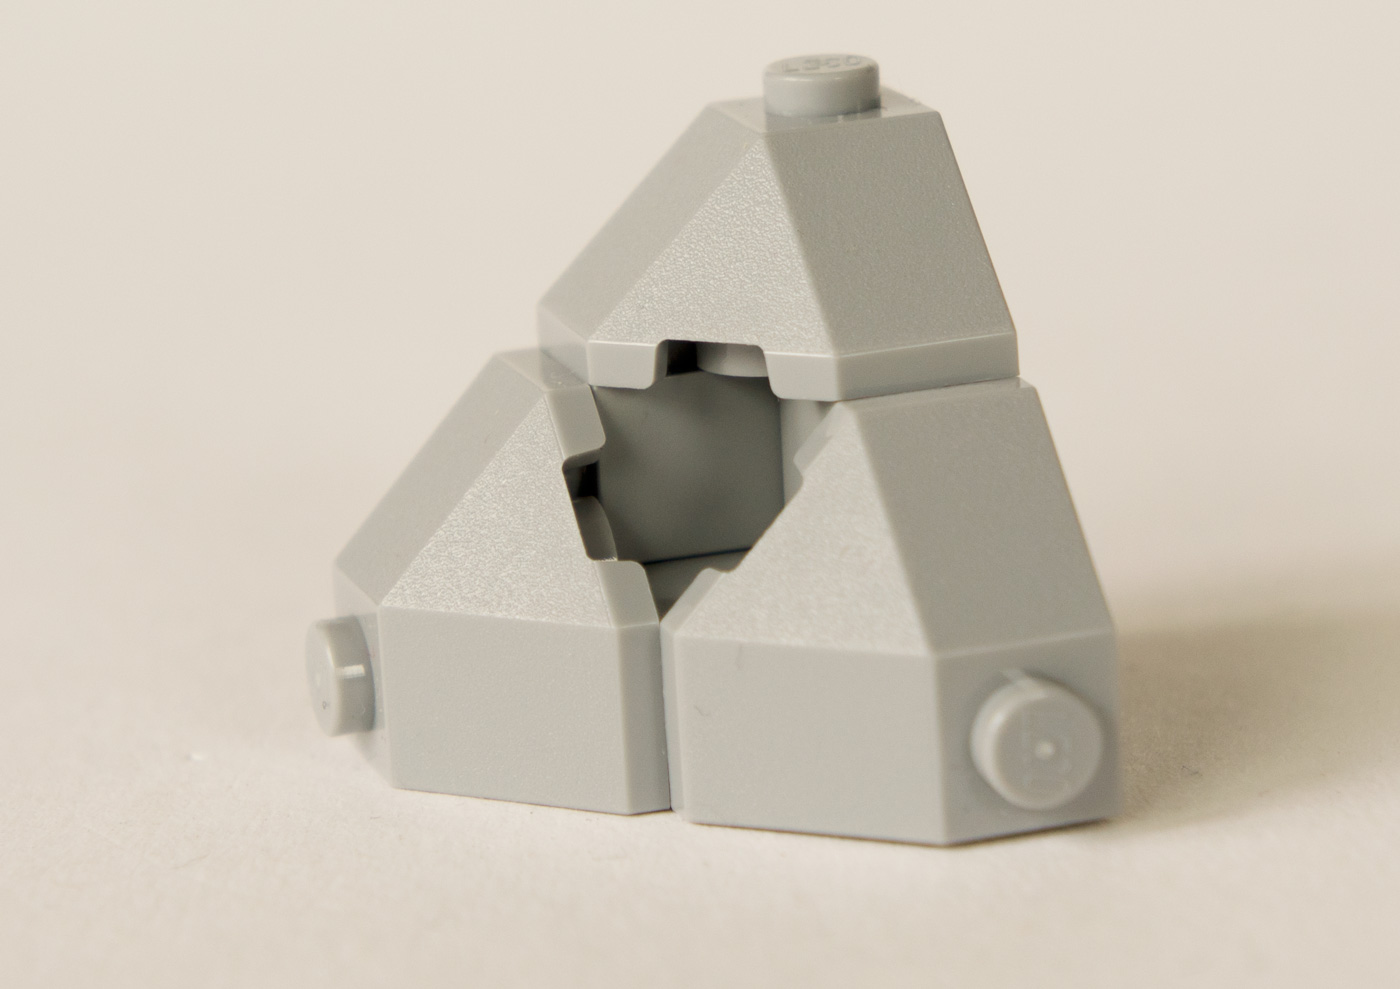 x4 Design 3044 3049 3048 LEGO Slope 45° Bricks 1x2 Roof Tiles